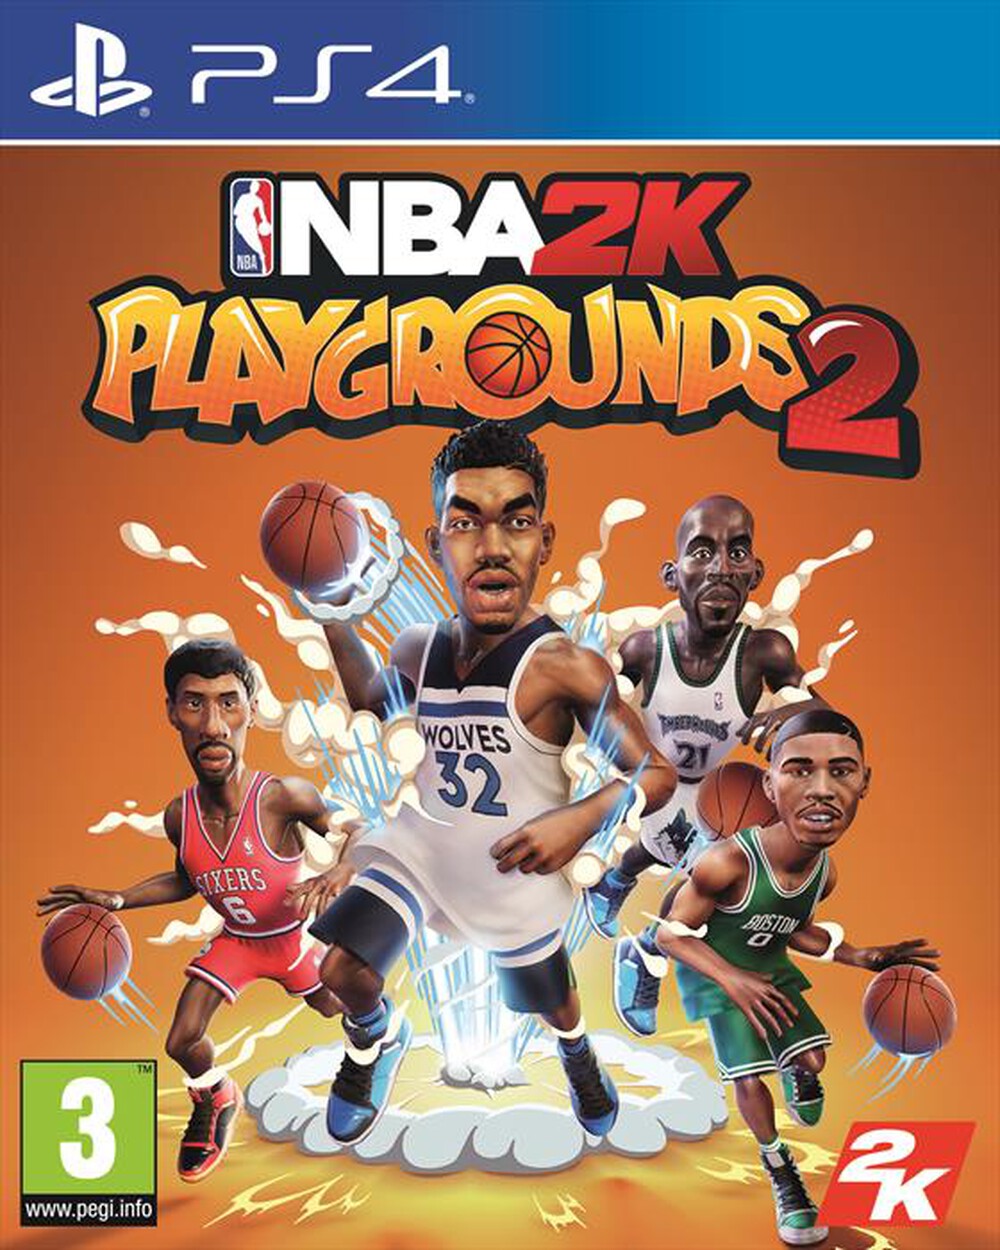 "2K GAMES - NBA 2K PLAYGROUNDS 2 PS4"